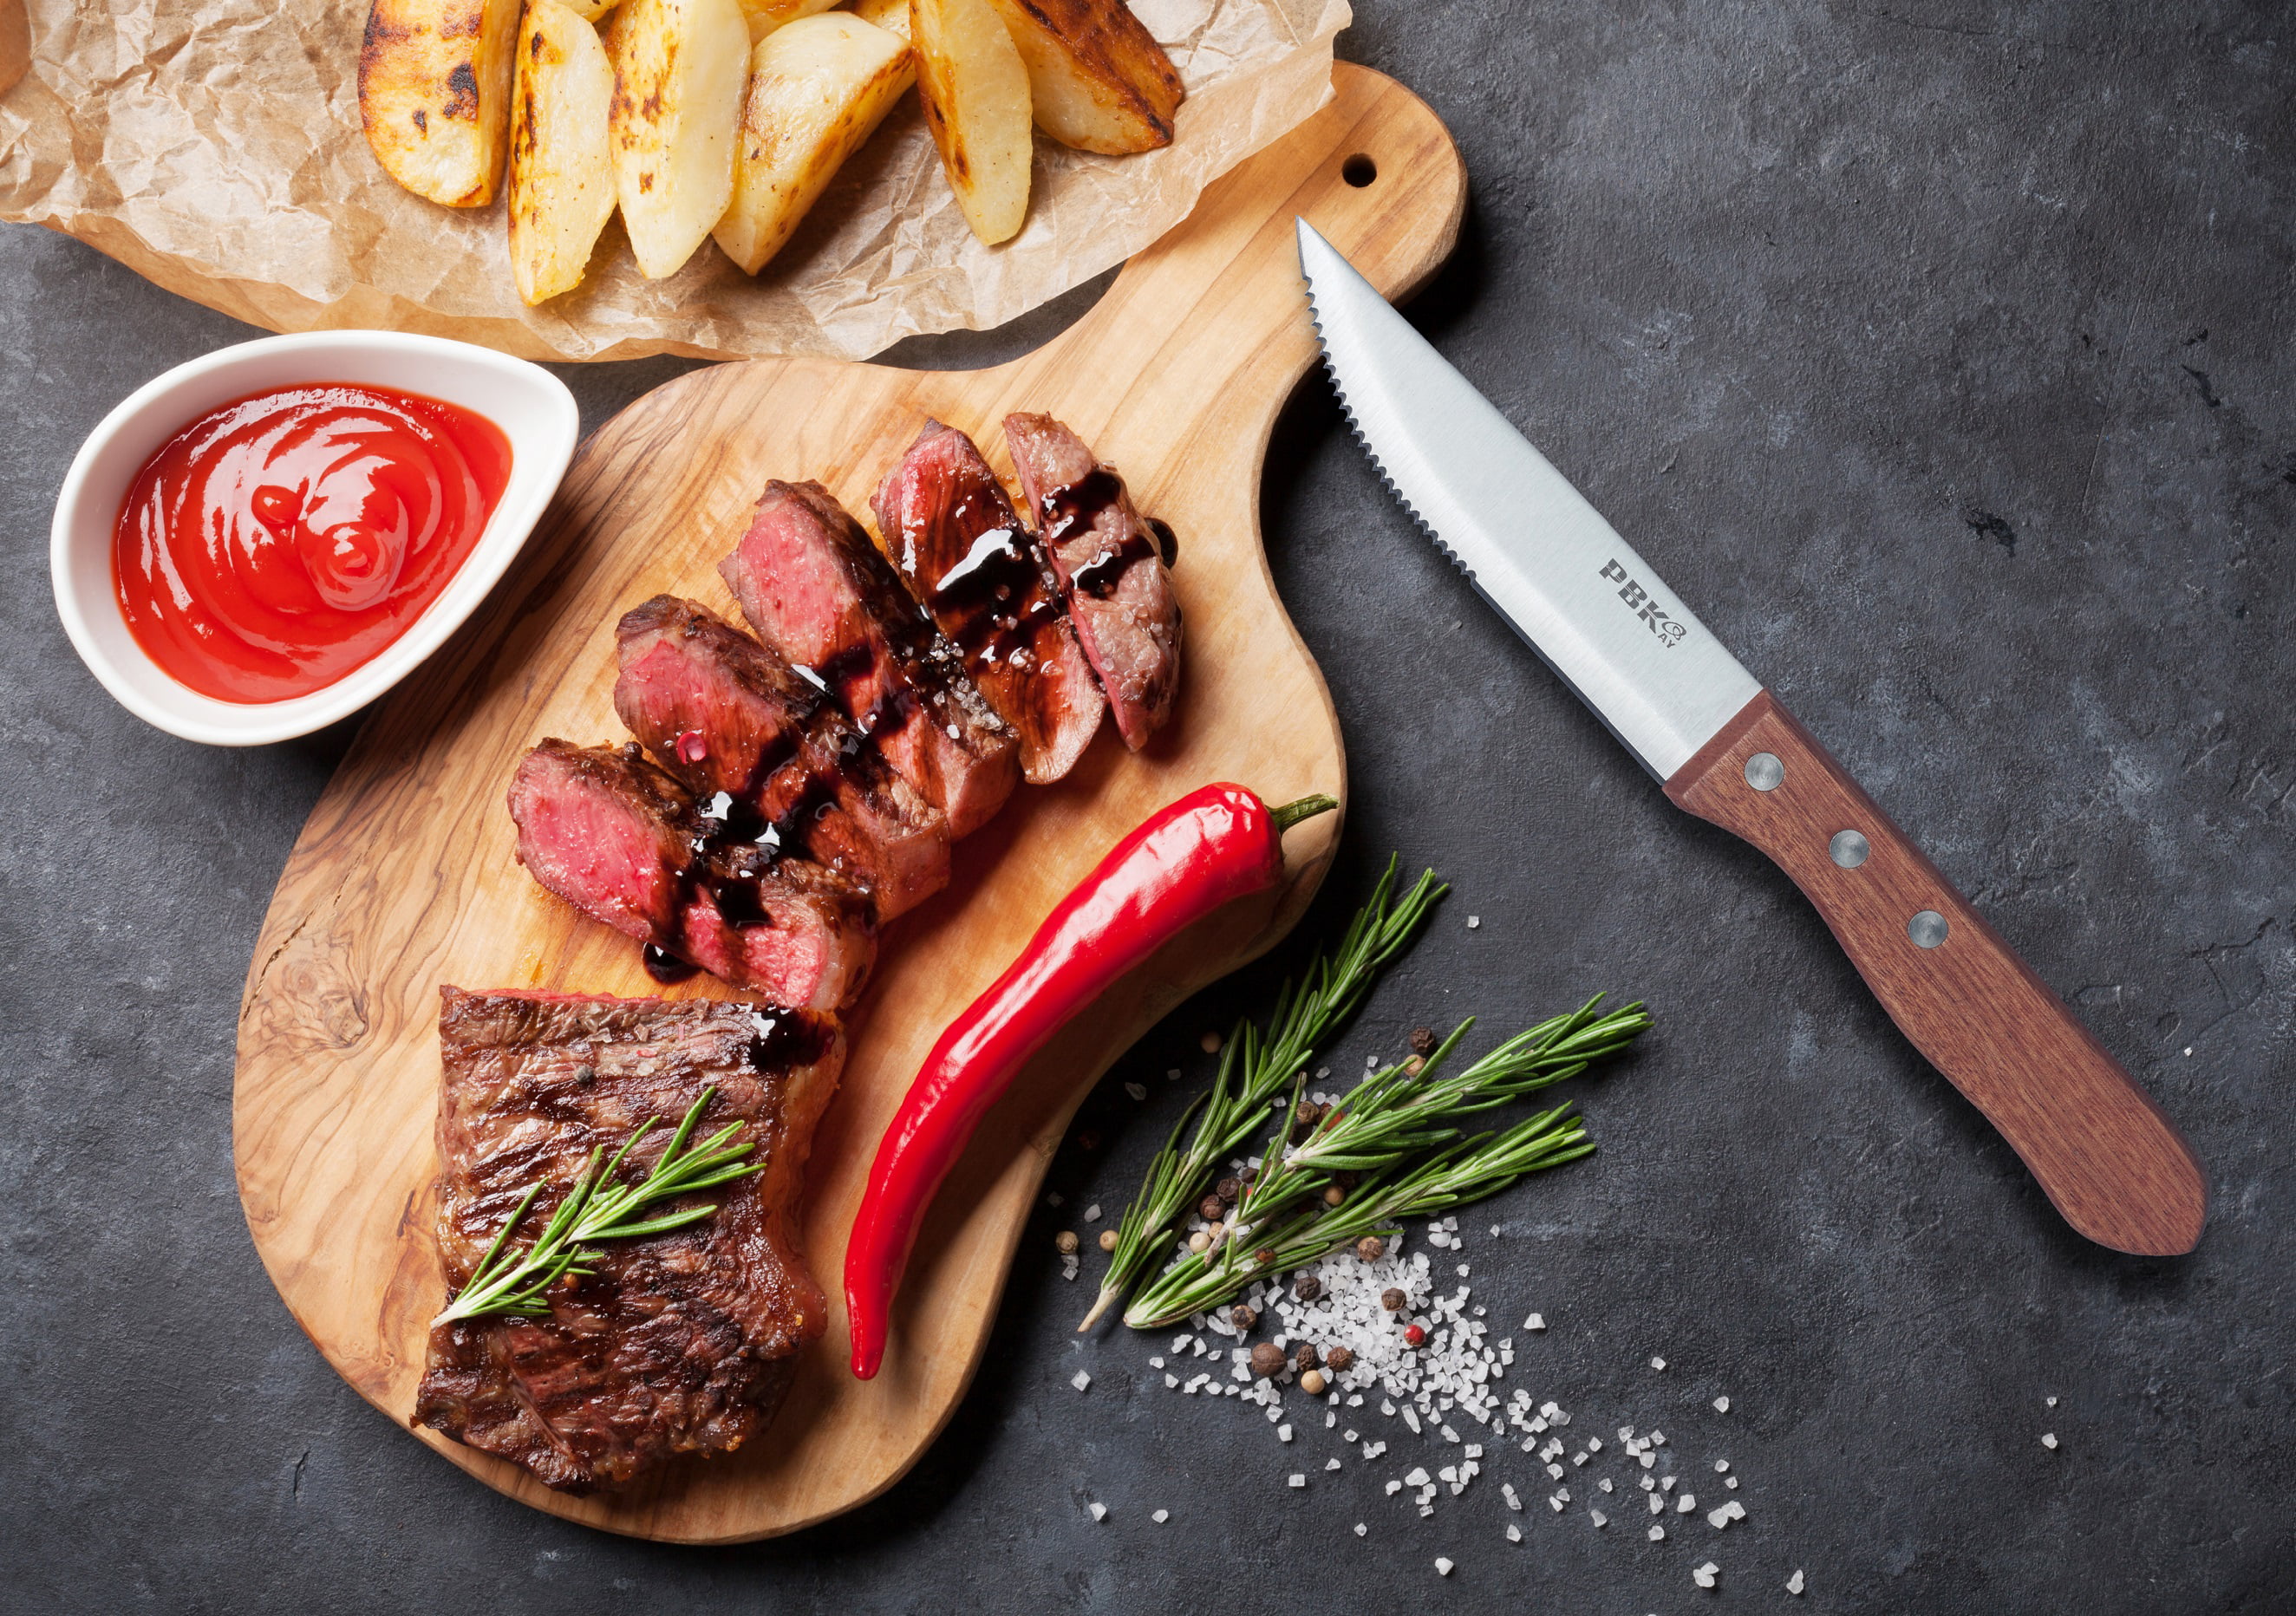 Bulk Restaurant Steak Knives with Rosewood Handle (1 Dozen)